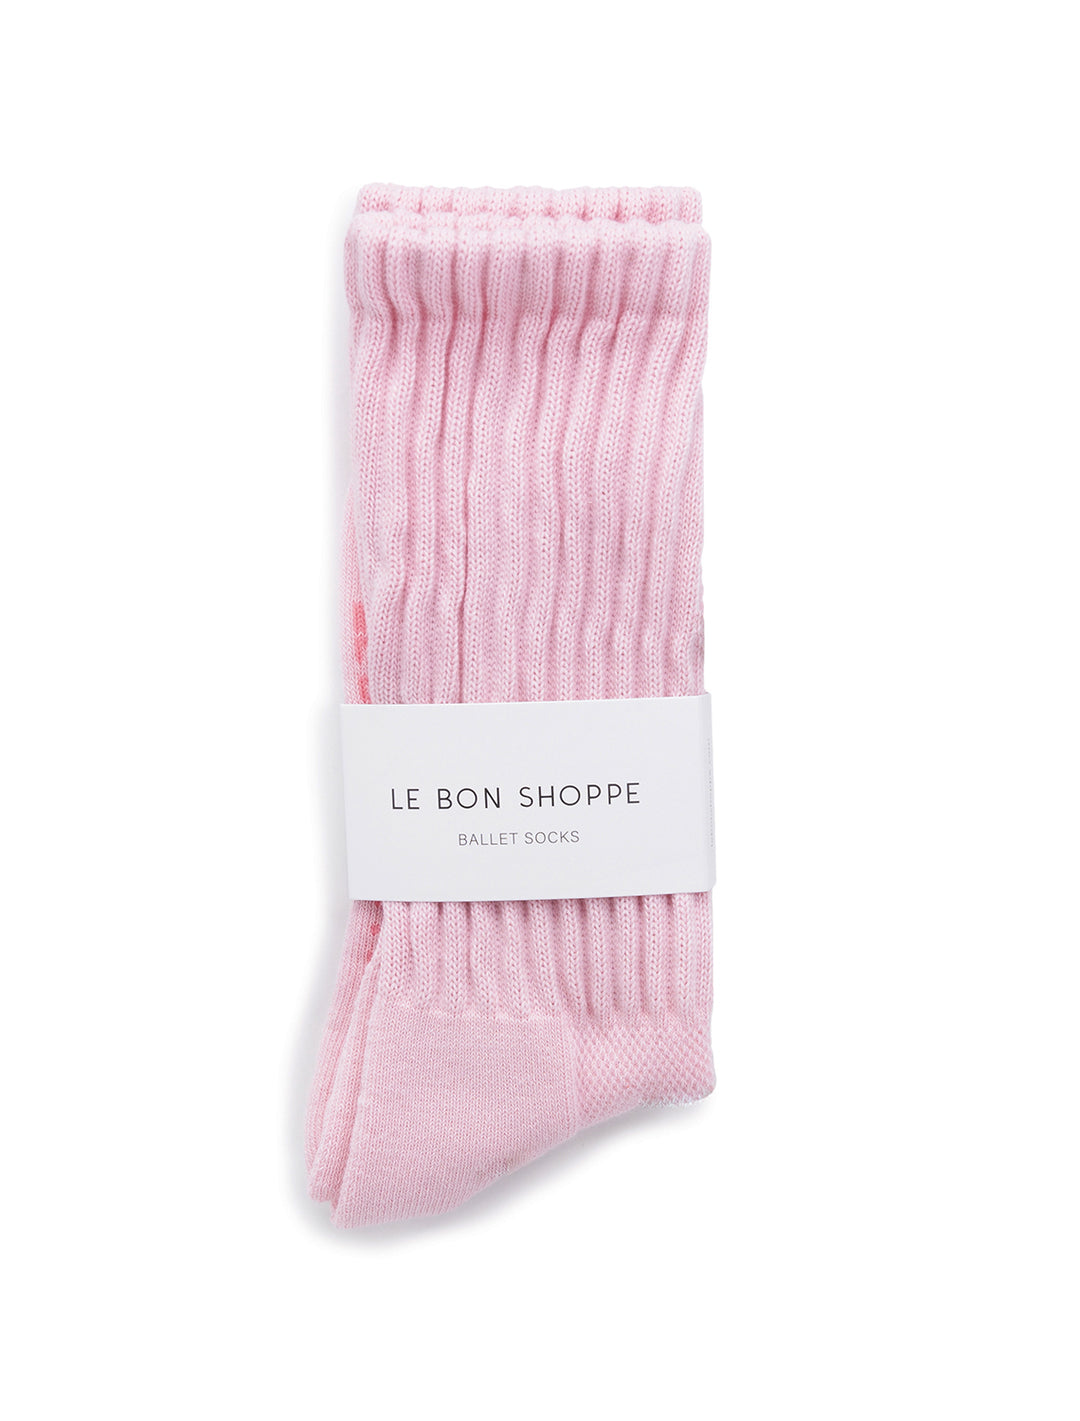 Front view of Le Bon Shoppe's ballet socks in ballet pink.